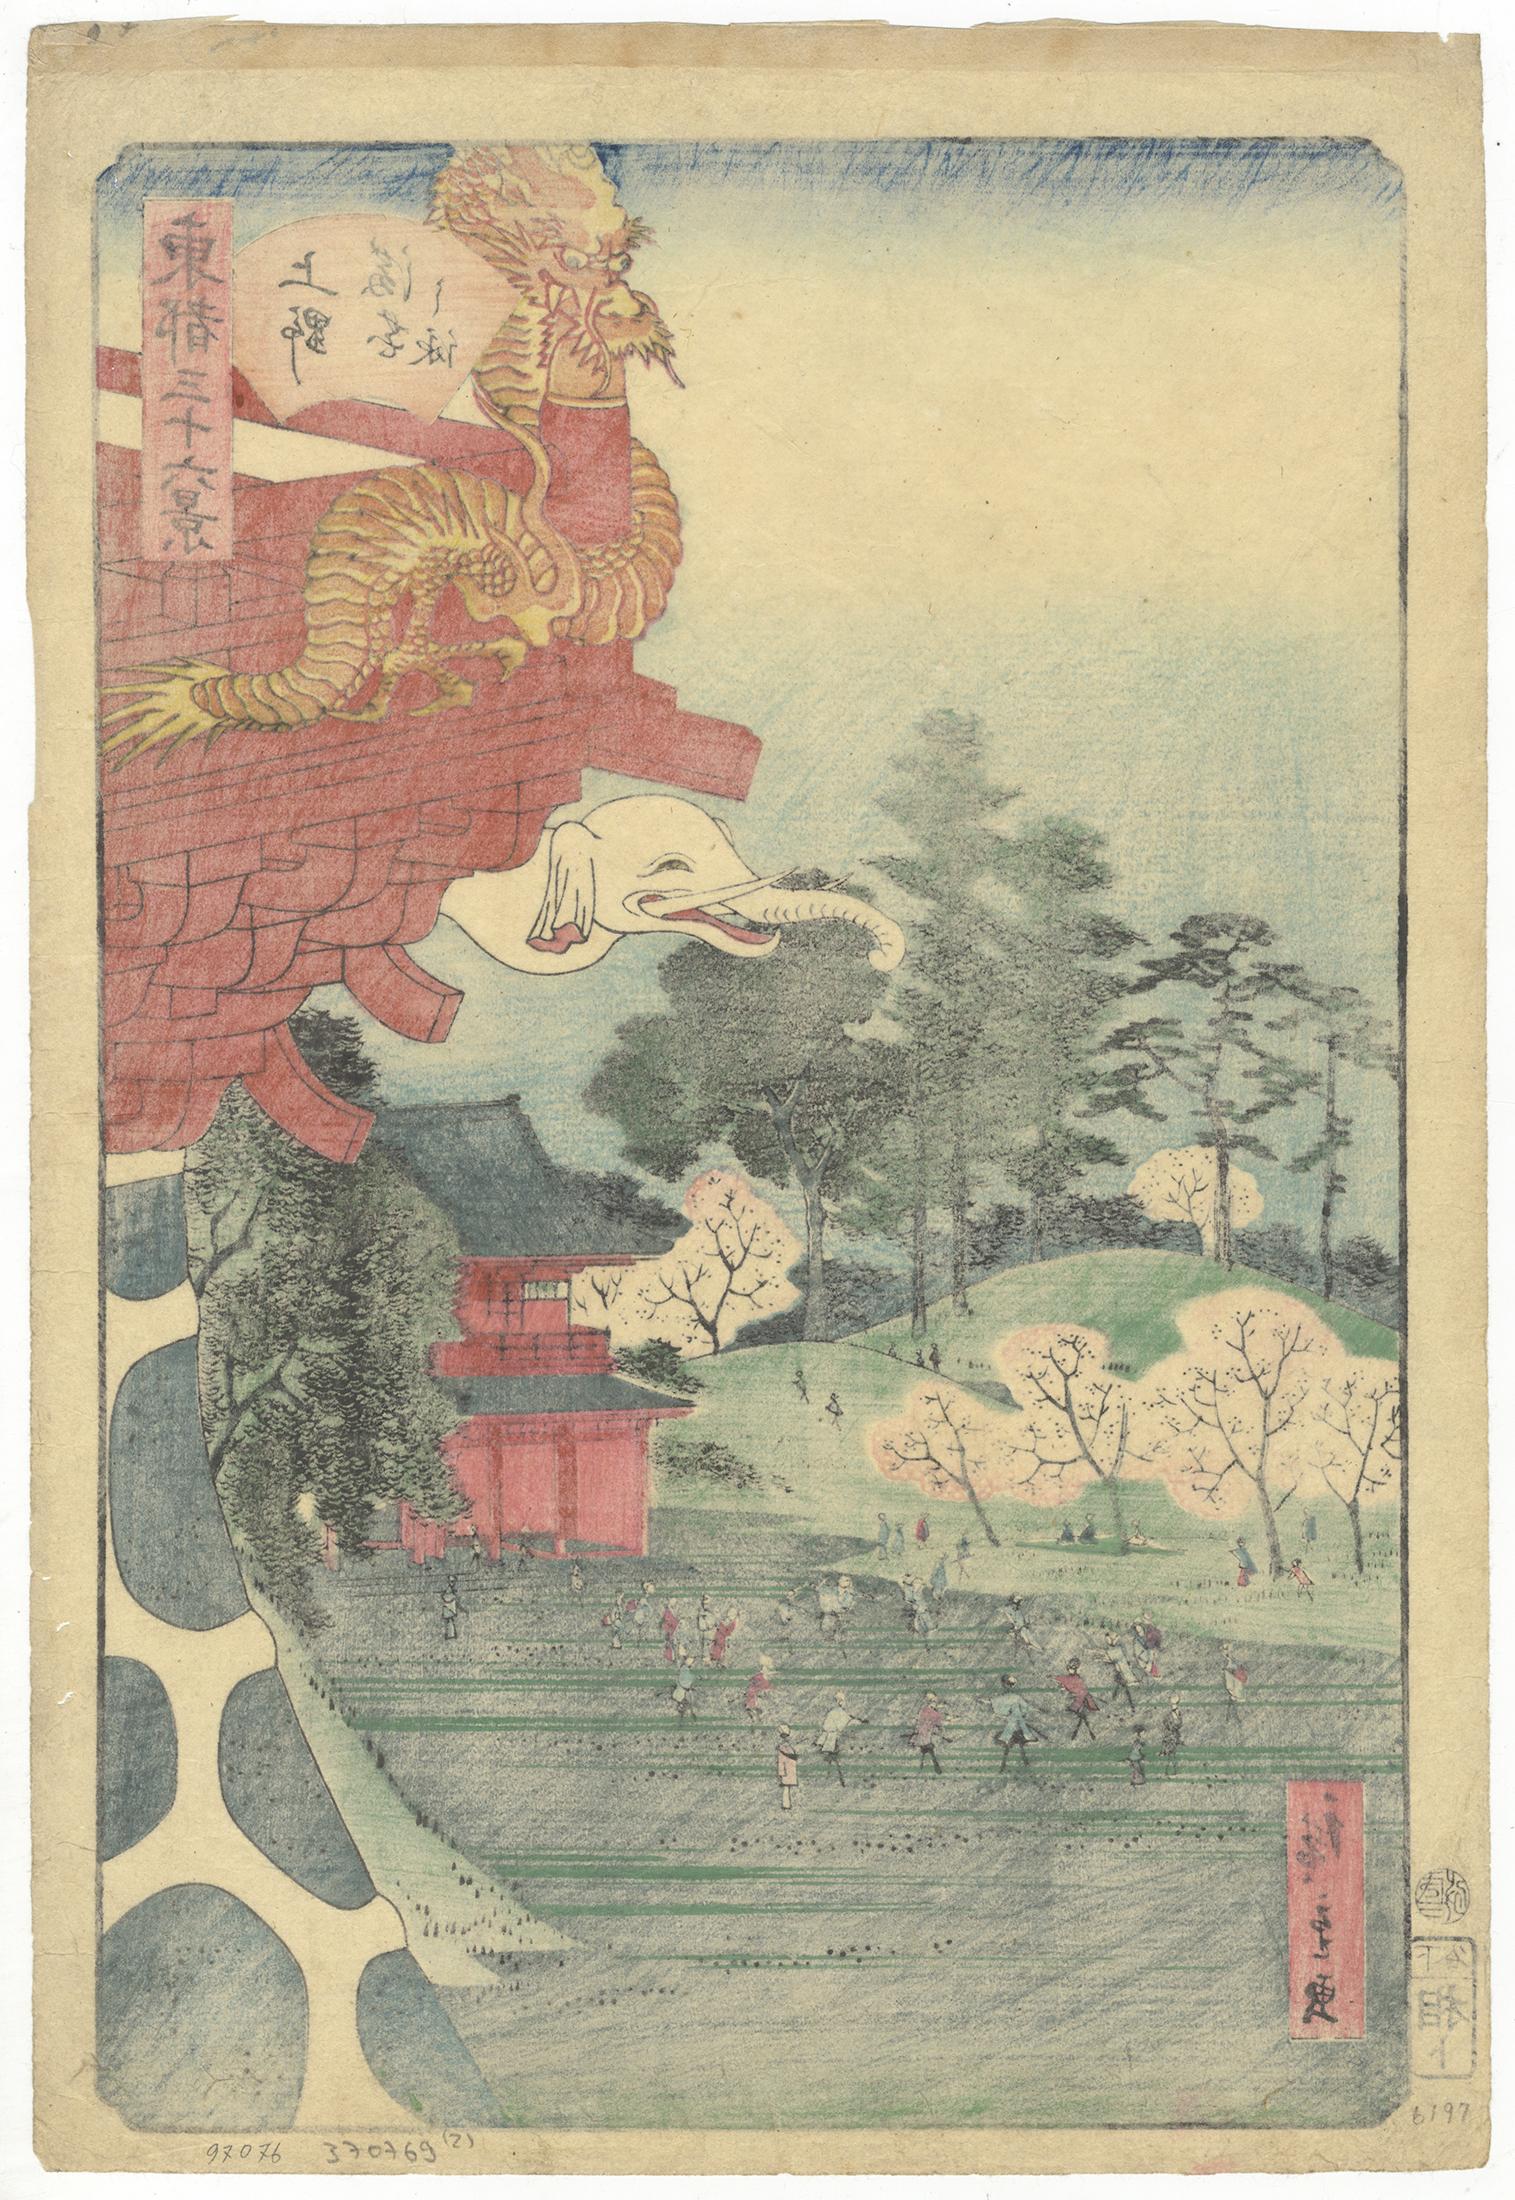 Hiroshige II, Original Japanese Woodblock Print, Floating World Art, Sakura, Edo - Gray Landscape Print by Utagawa Hiroshige II